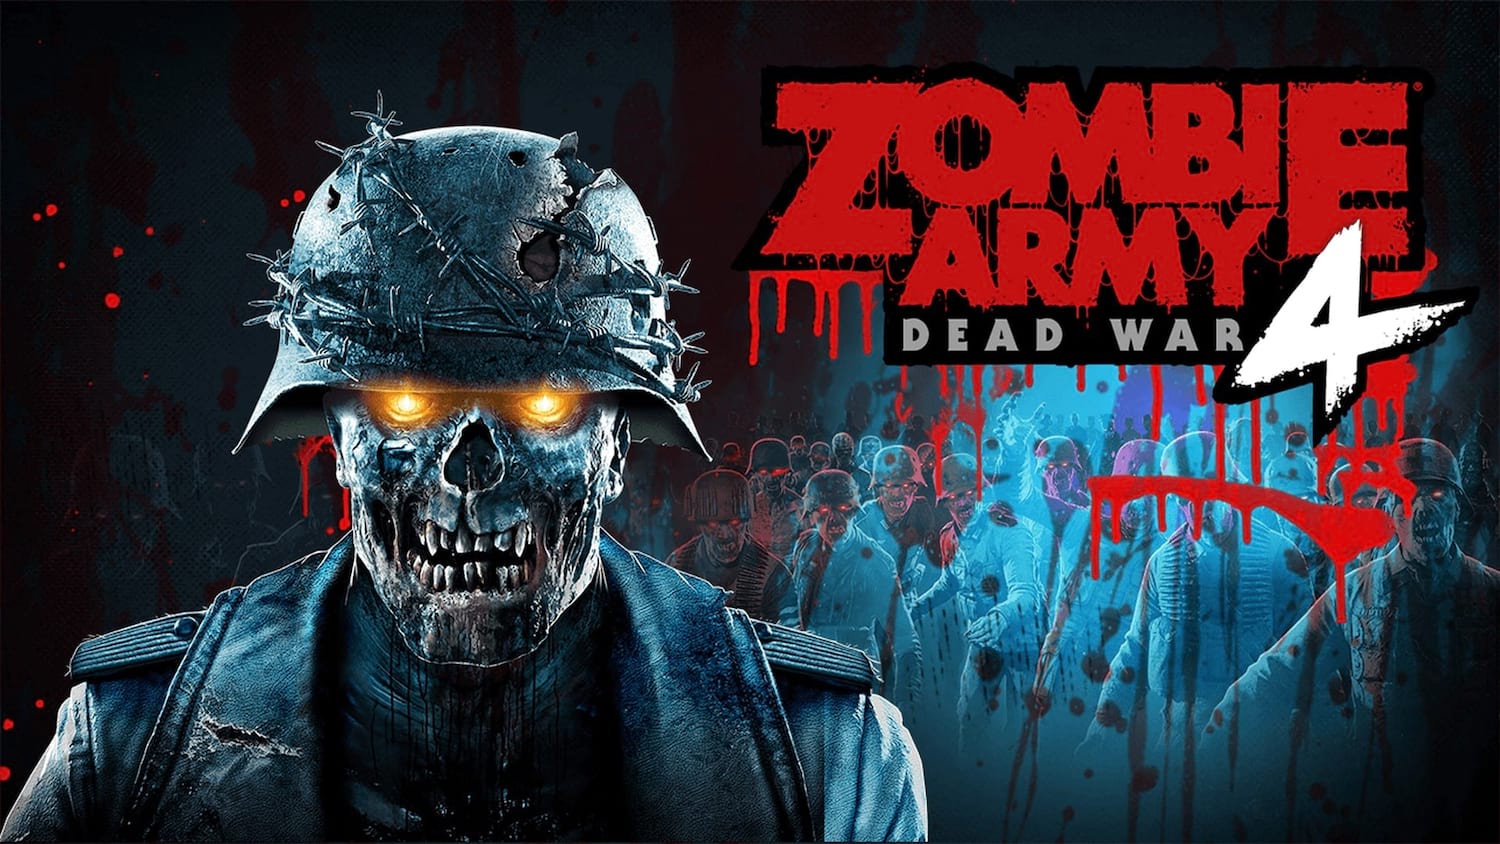 PlayStation Plus de abril terá Days Gone, Oddworld: Soulstorm e Zombie Army  4: Dead War - Tecnologia e Games - Folha PE